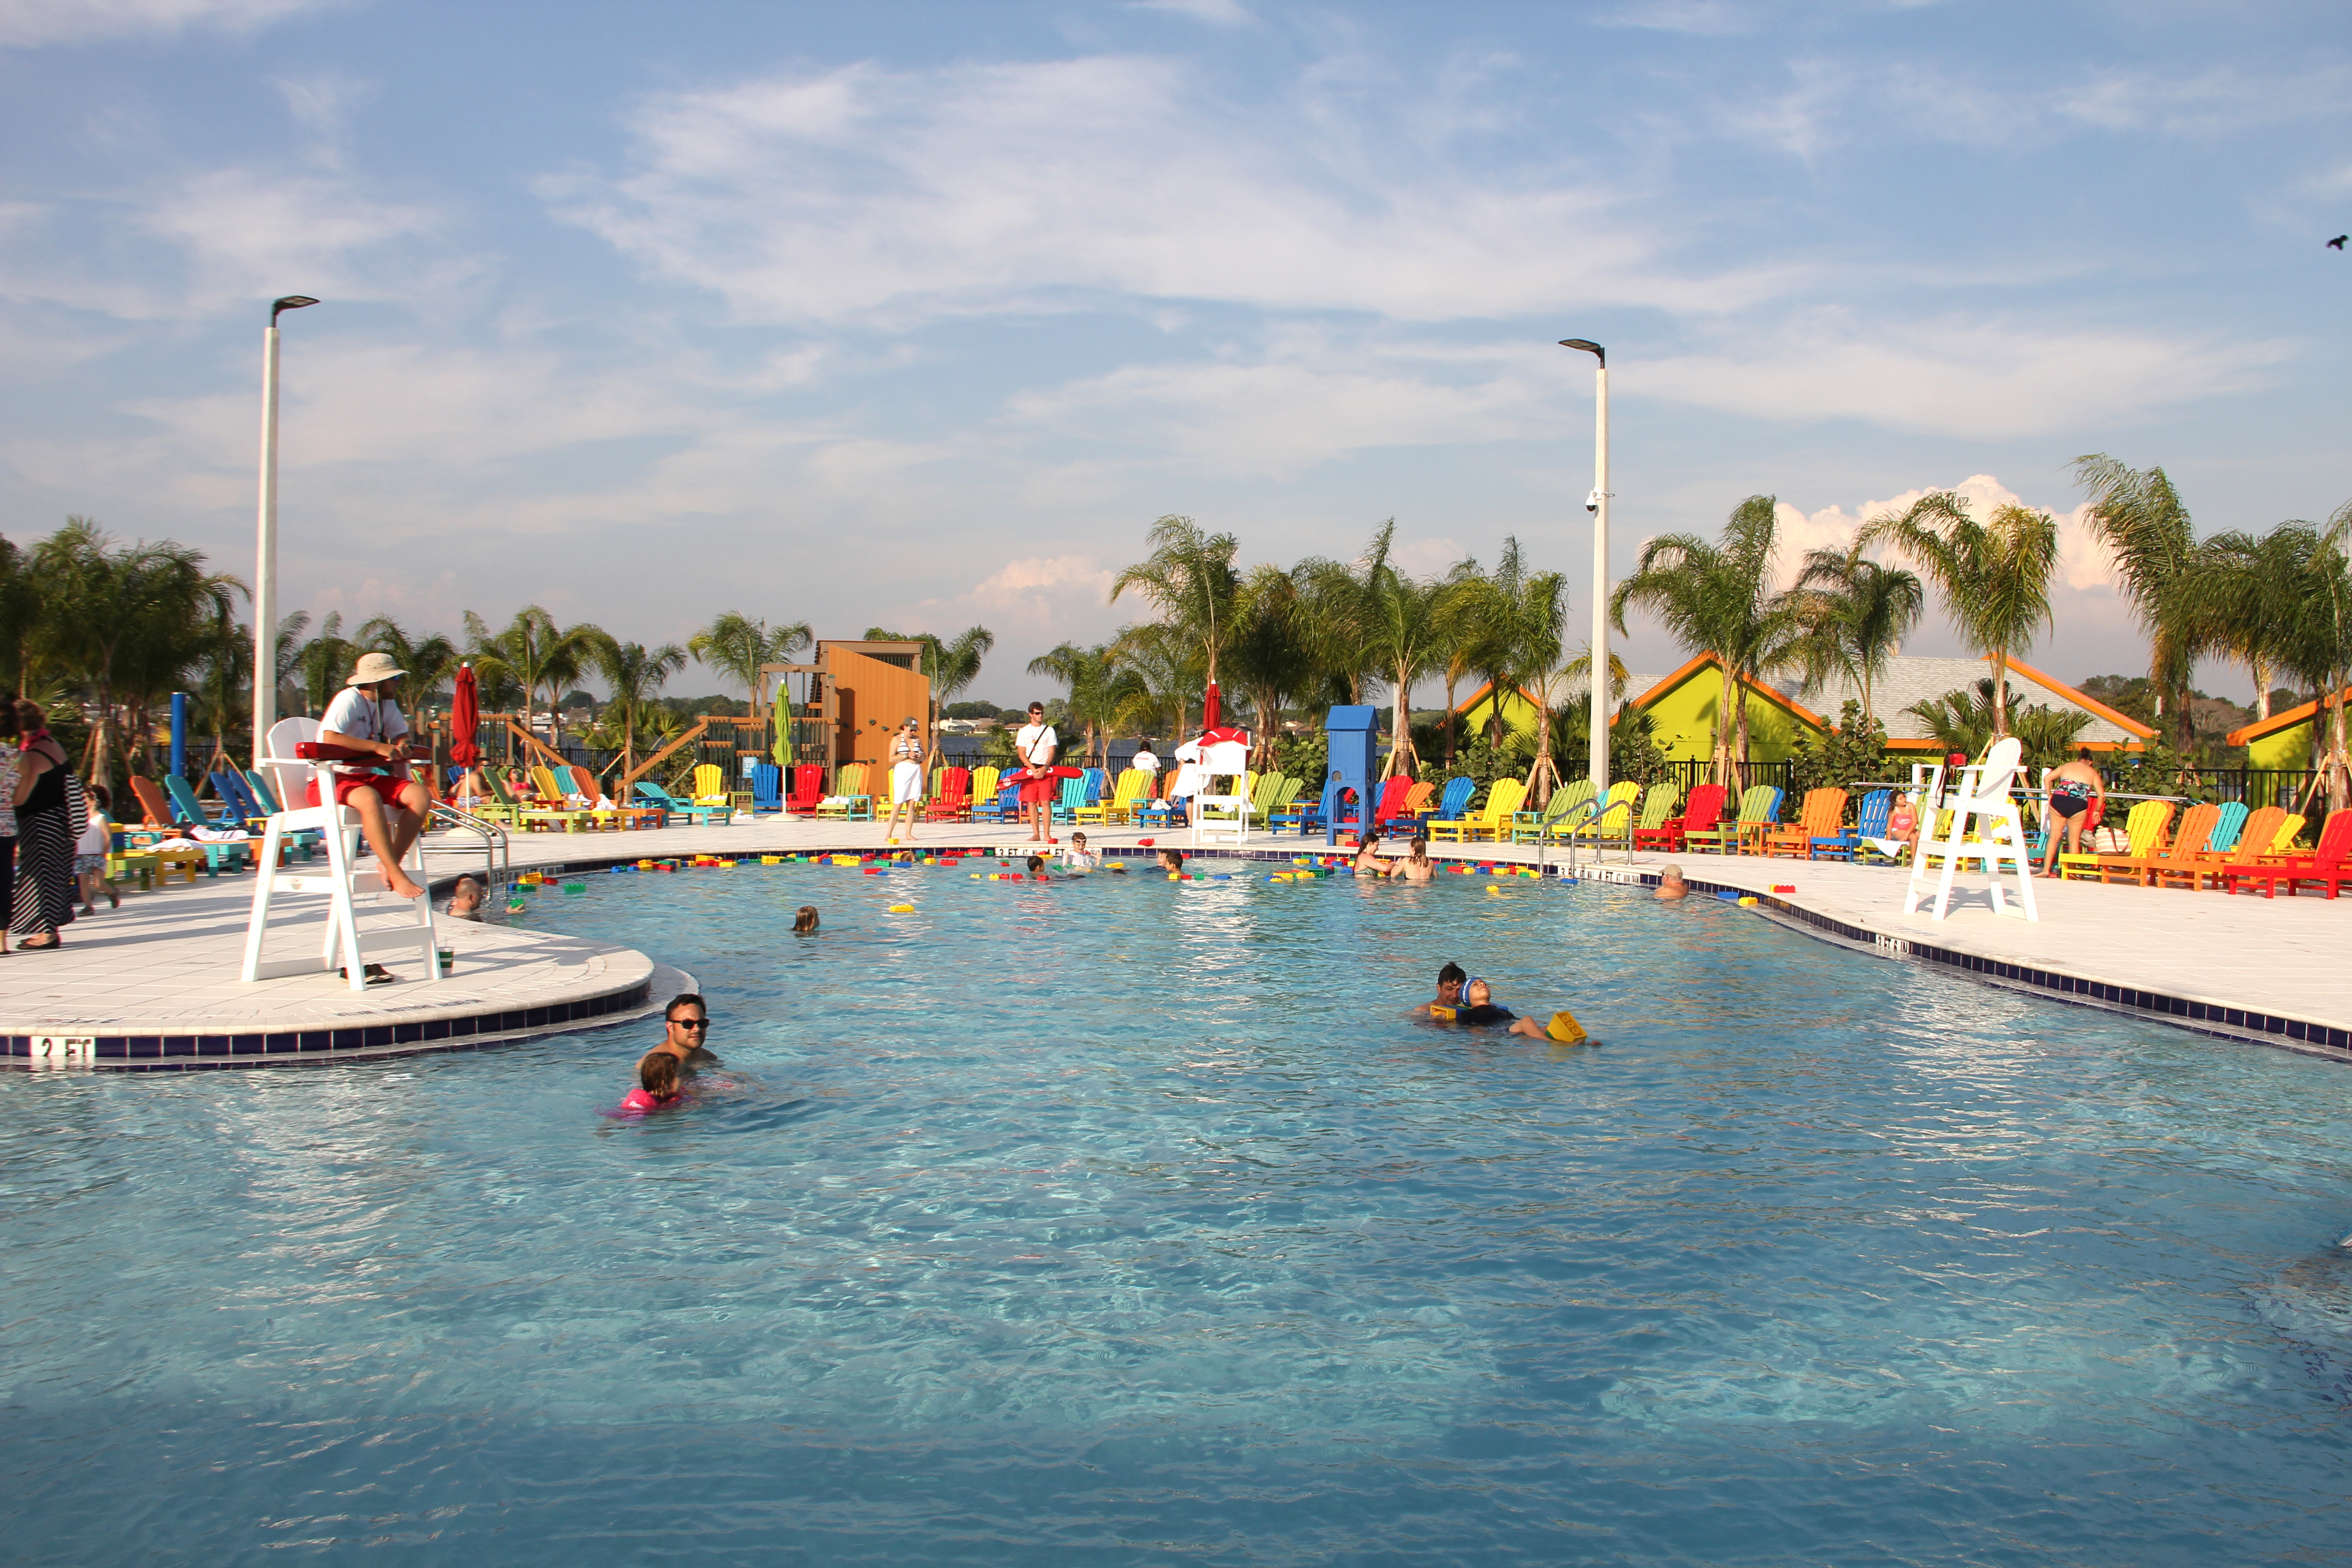 LEGOLAND Beach Retreat hotel pool | legoland hotel | acupful.com | Mandy Carter - travel blogger | family friendly hotel | #brickbeach | Legoland Florida | family travel